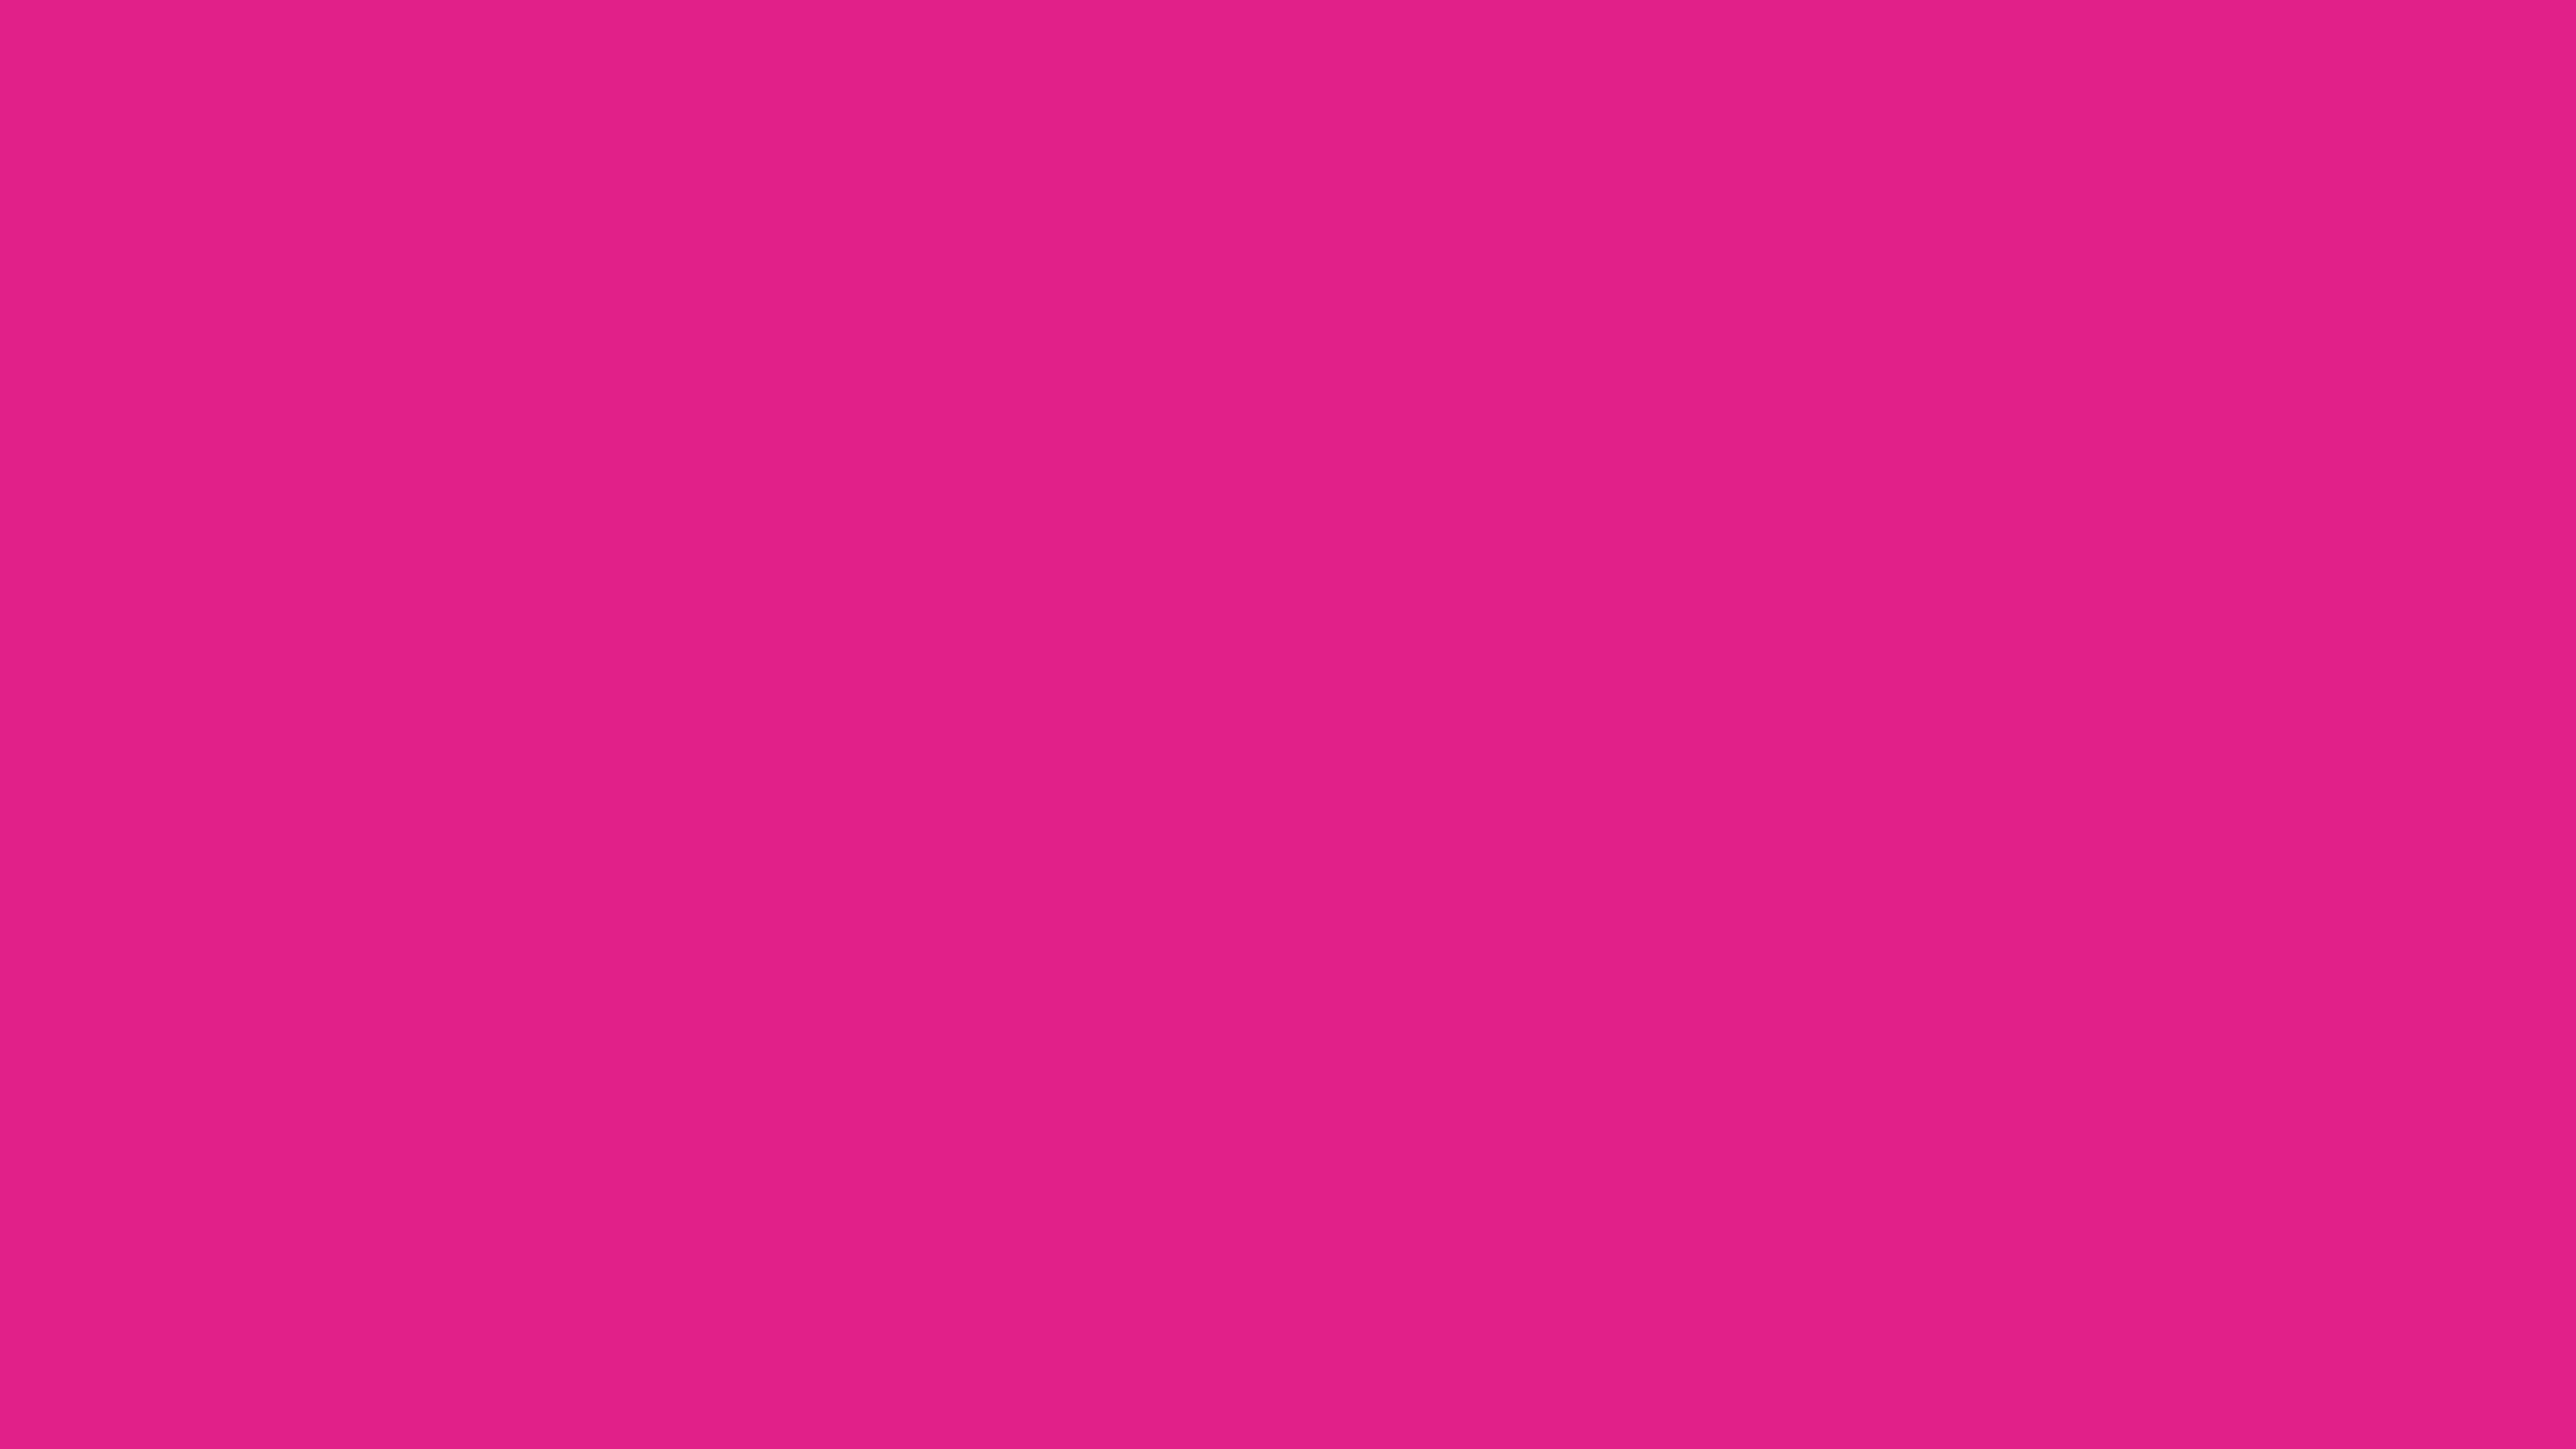 7680x4320 Barbie Pink Solid Color Background